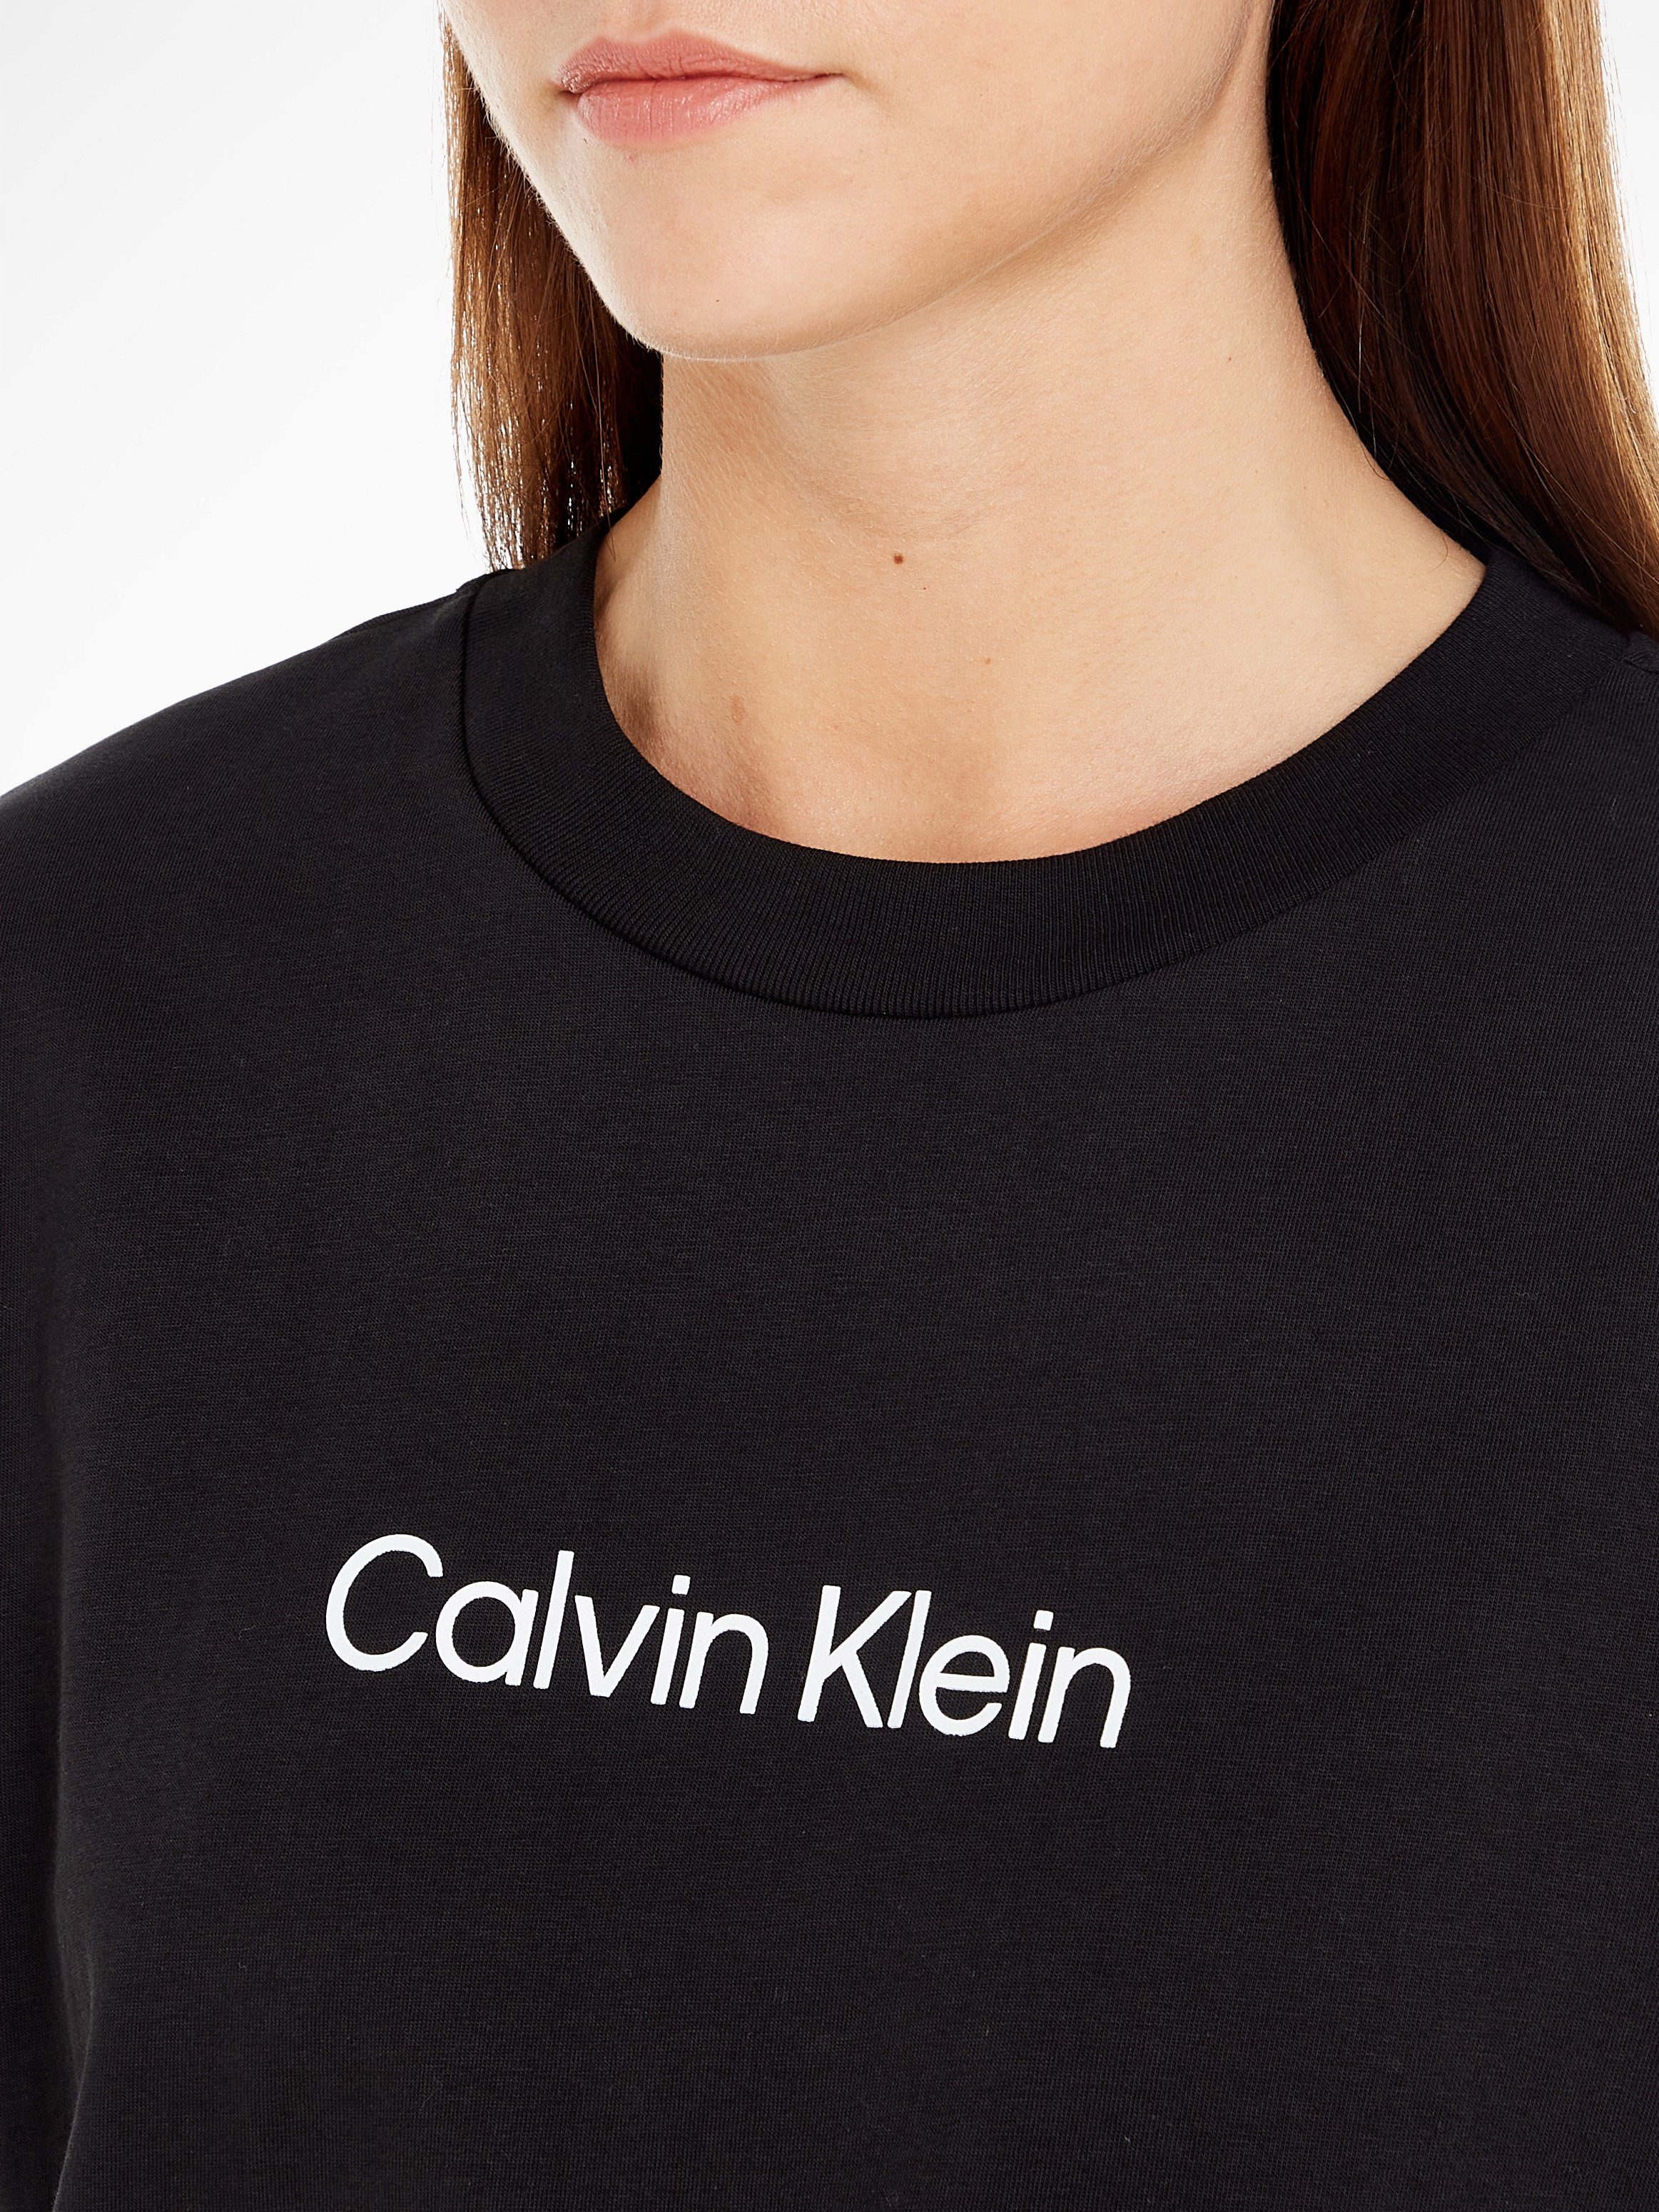 Calvin Klein T-Shirt schwarz Shirt HERO LOGO REGULAR